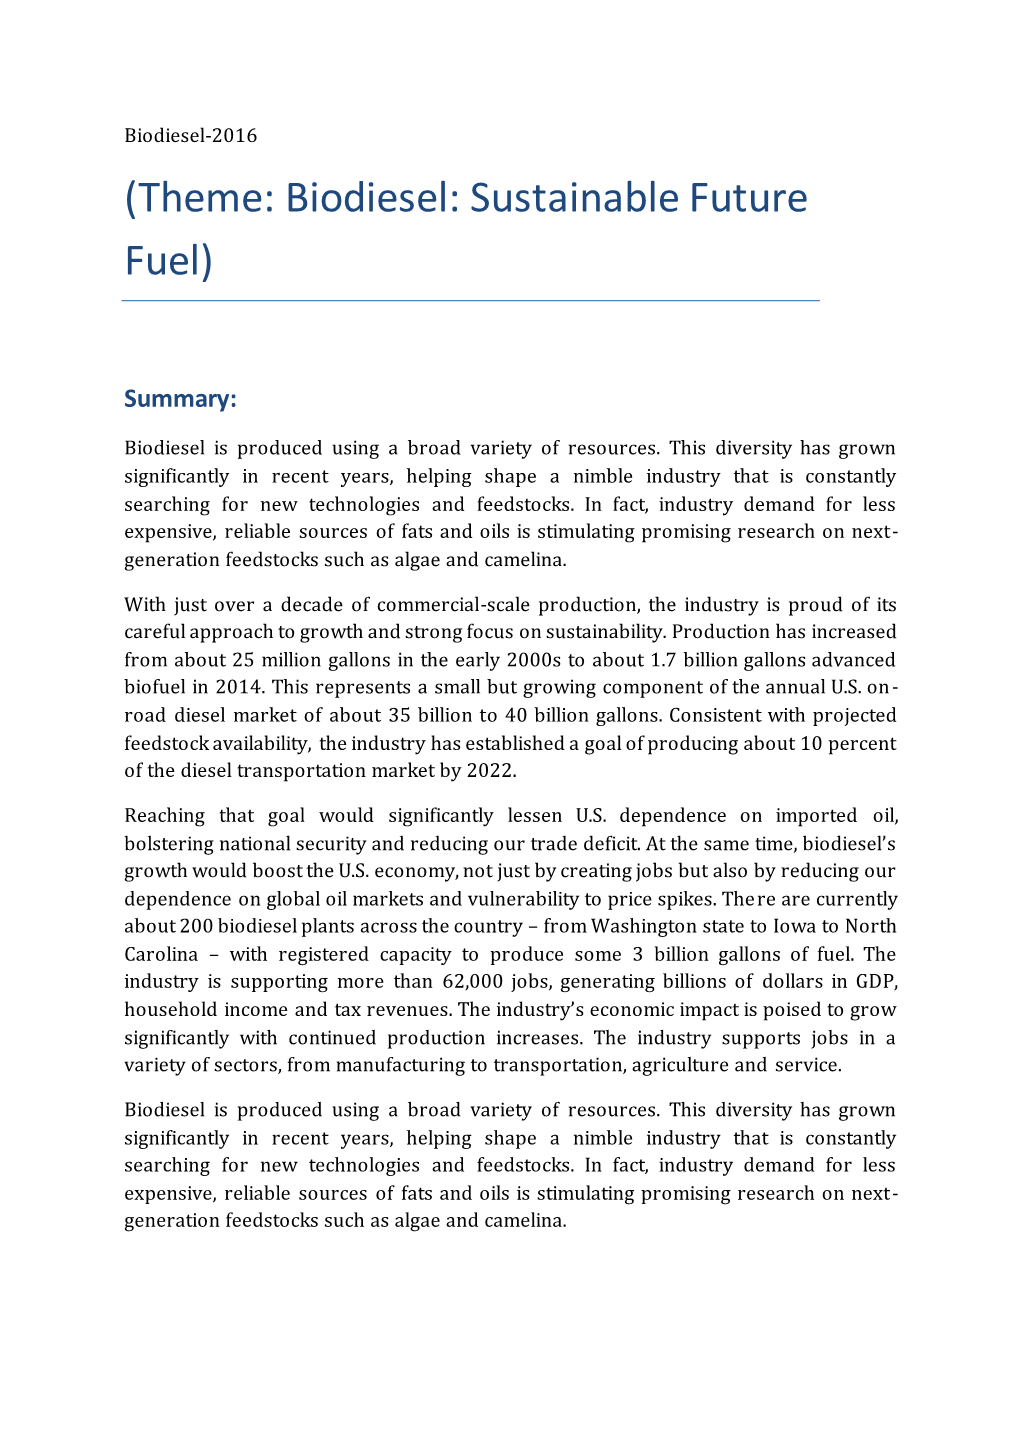 Theme: Biodiesel: Sustainable Future Fuel